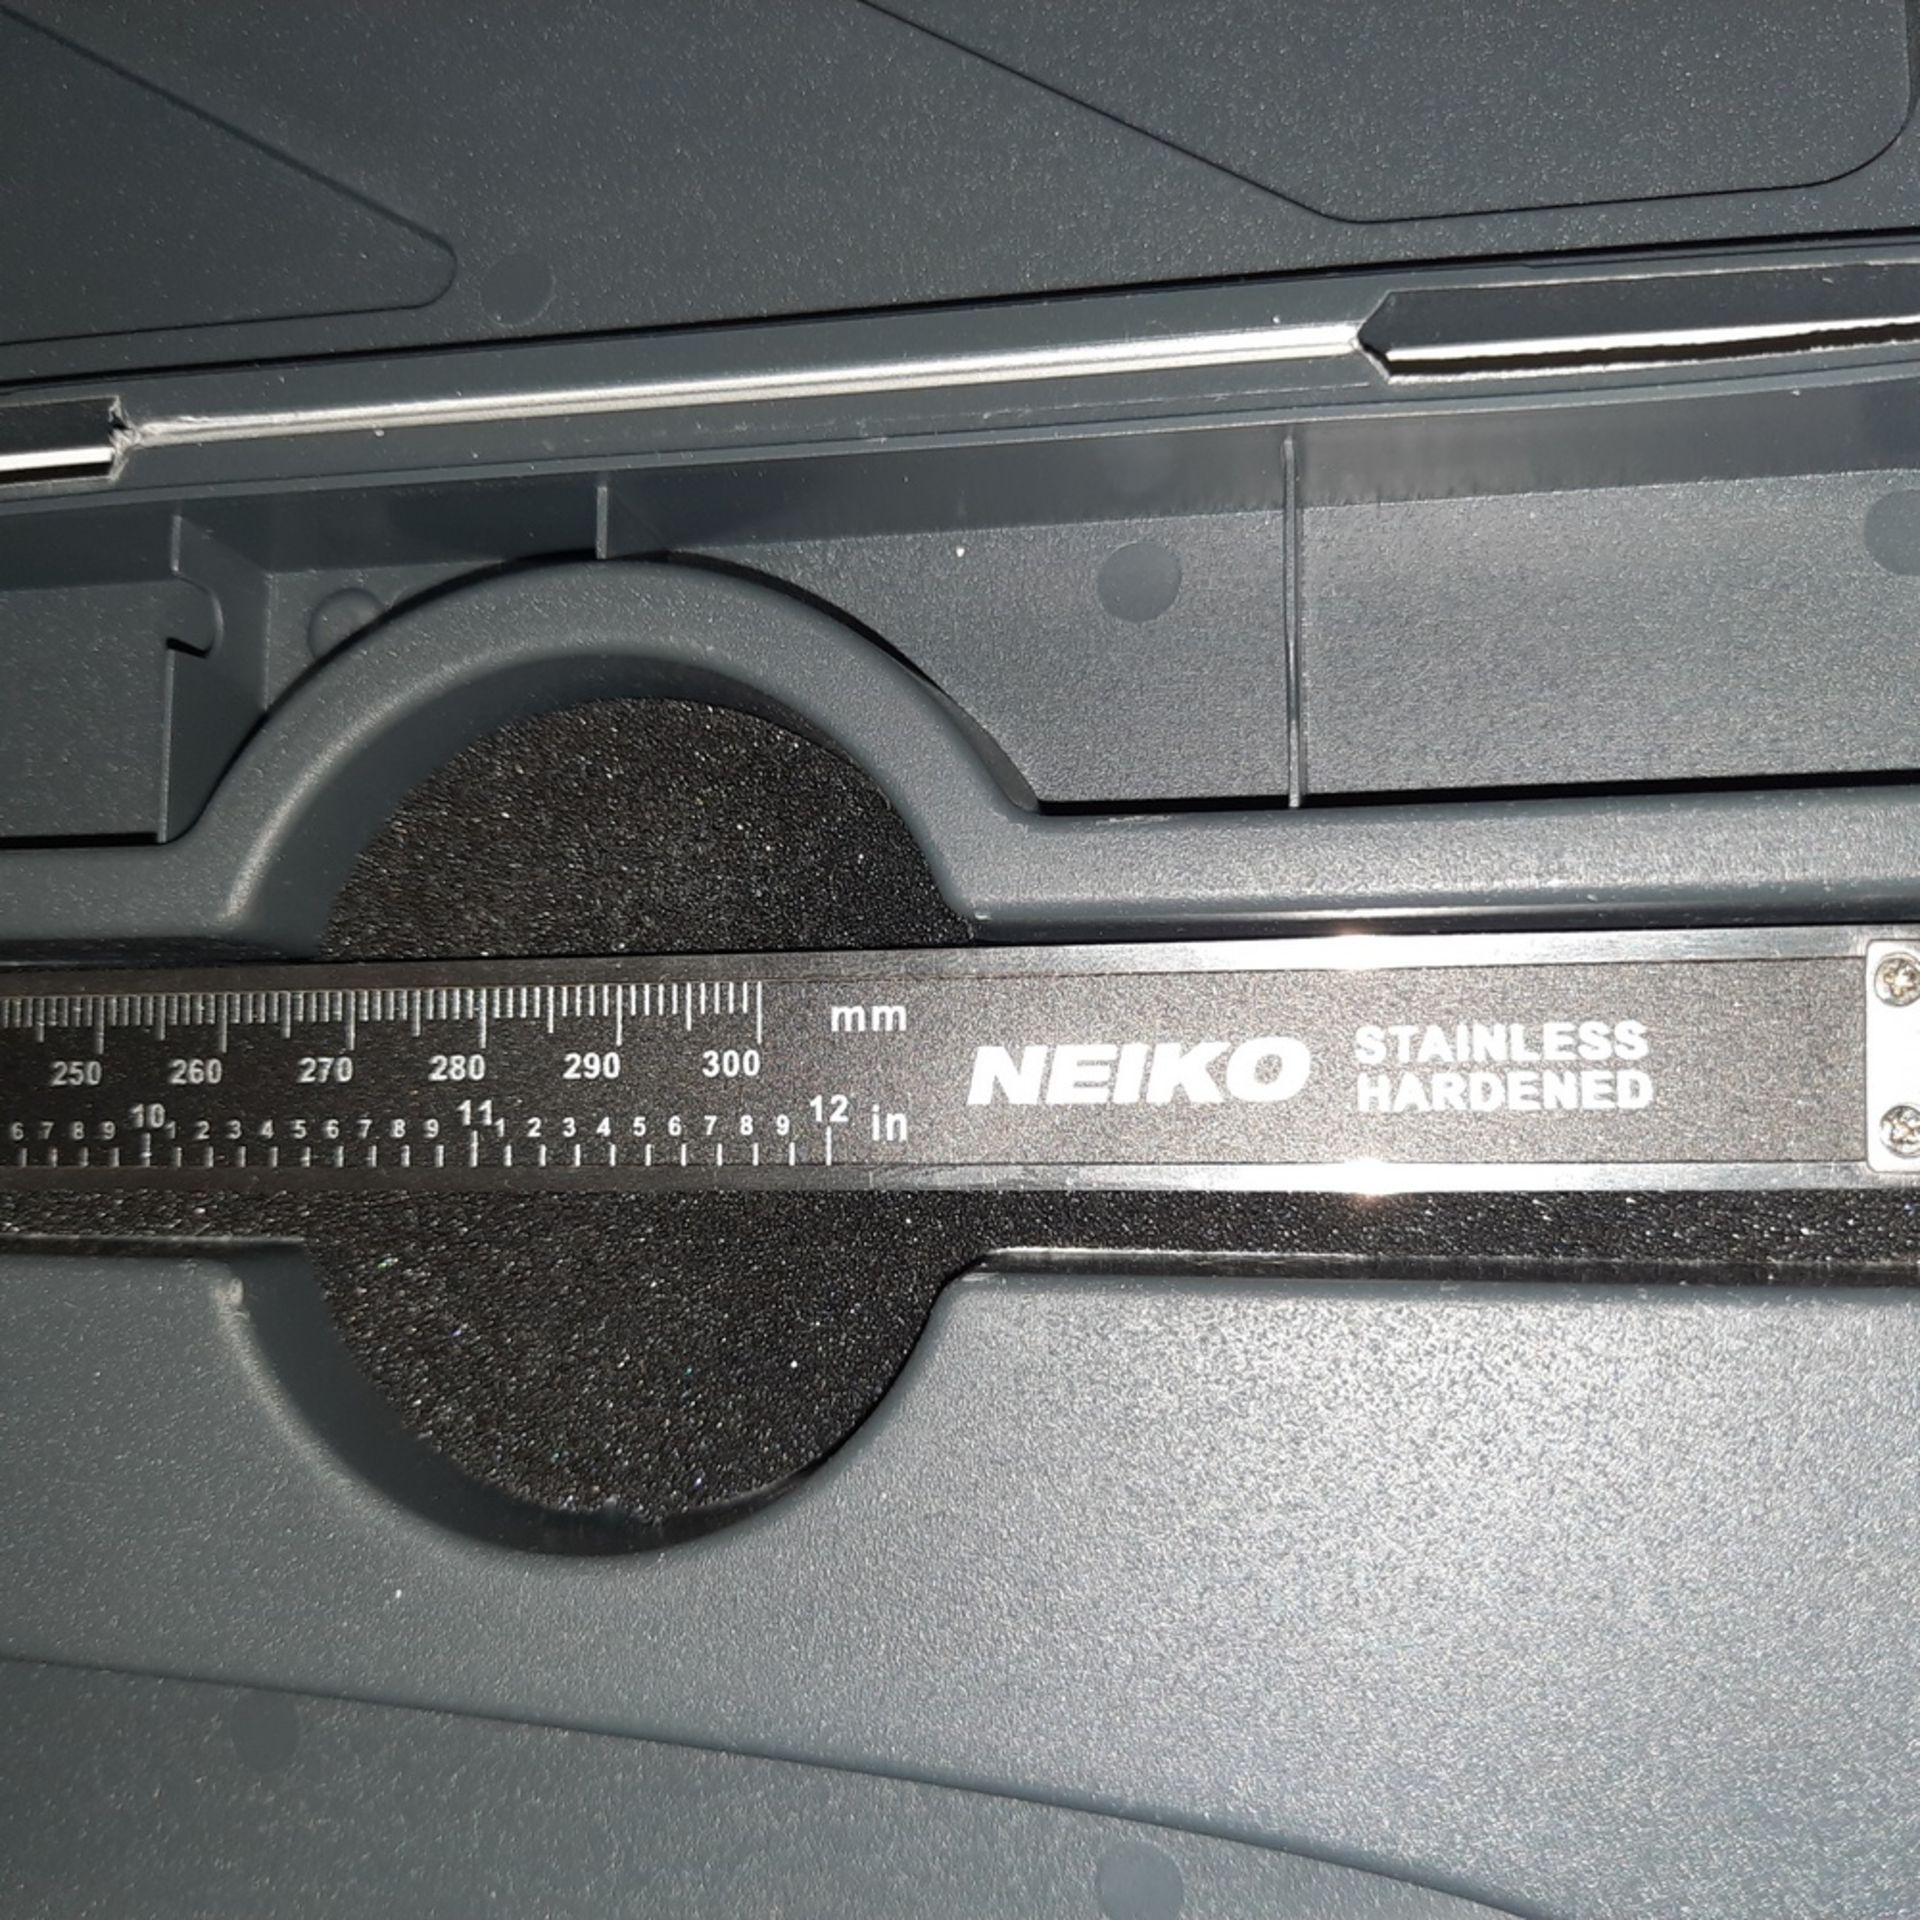 NEIKO Digital Micrometer, c/w Case - Image 2 of 3